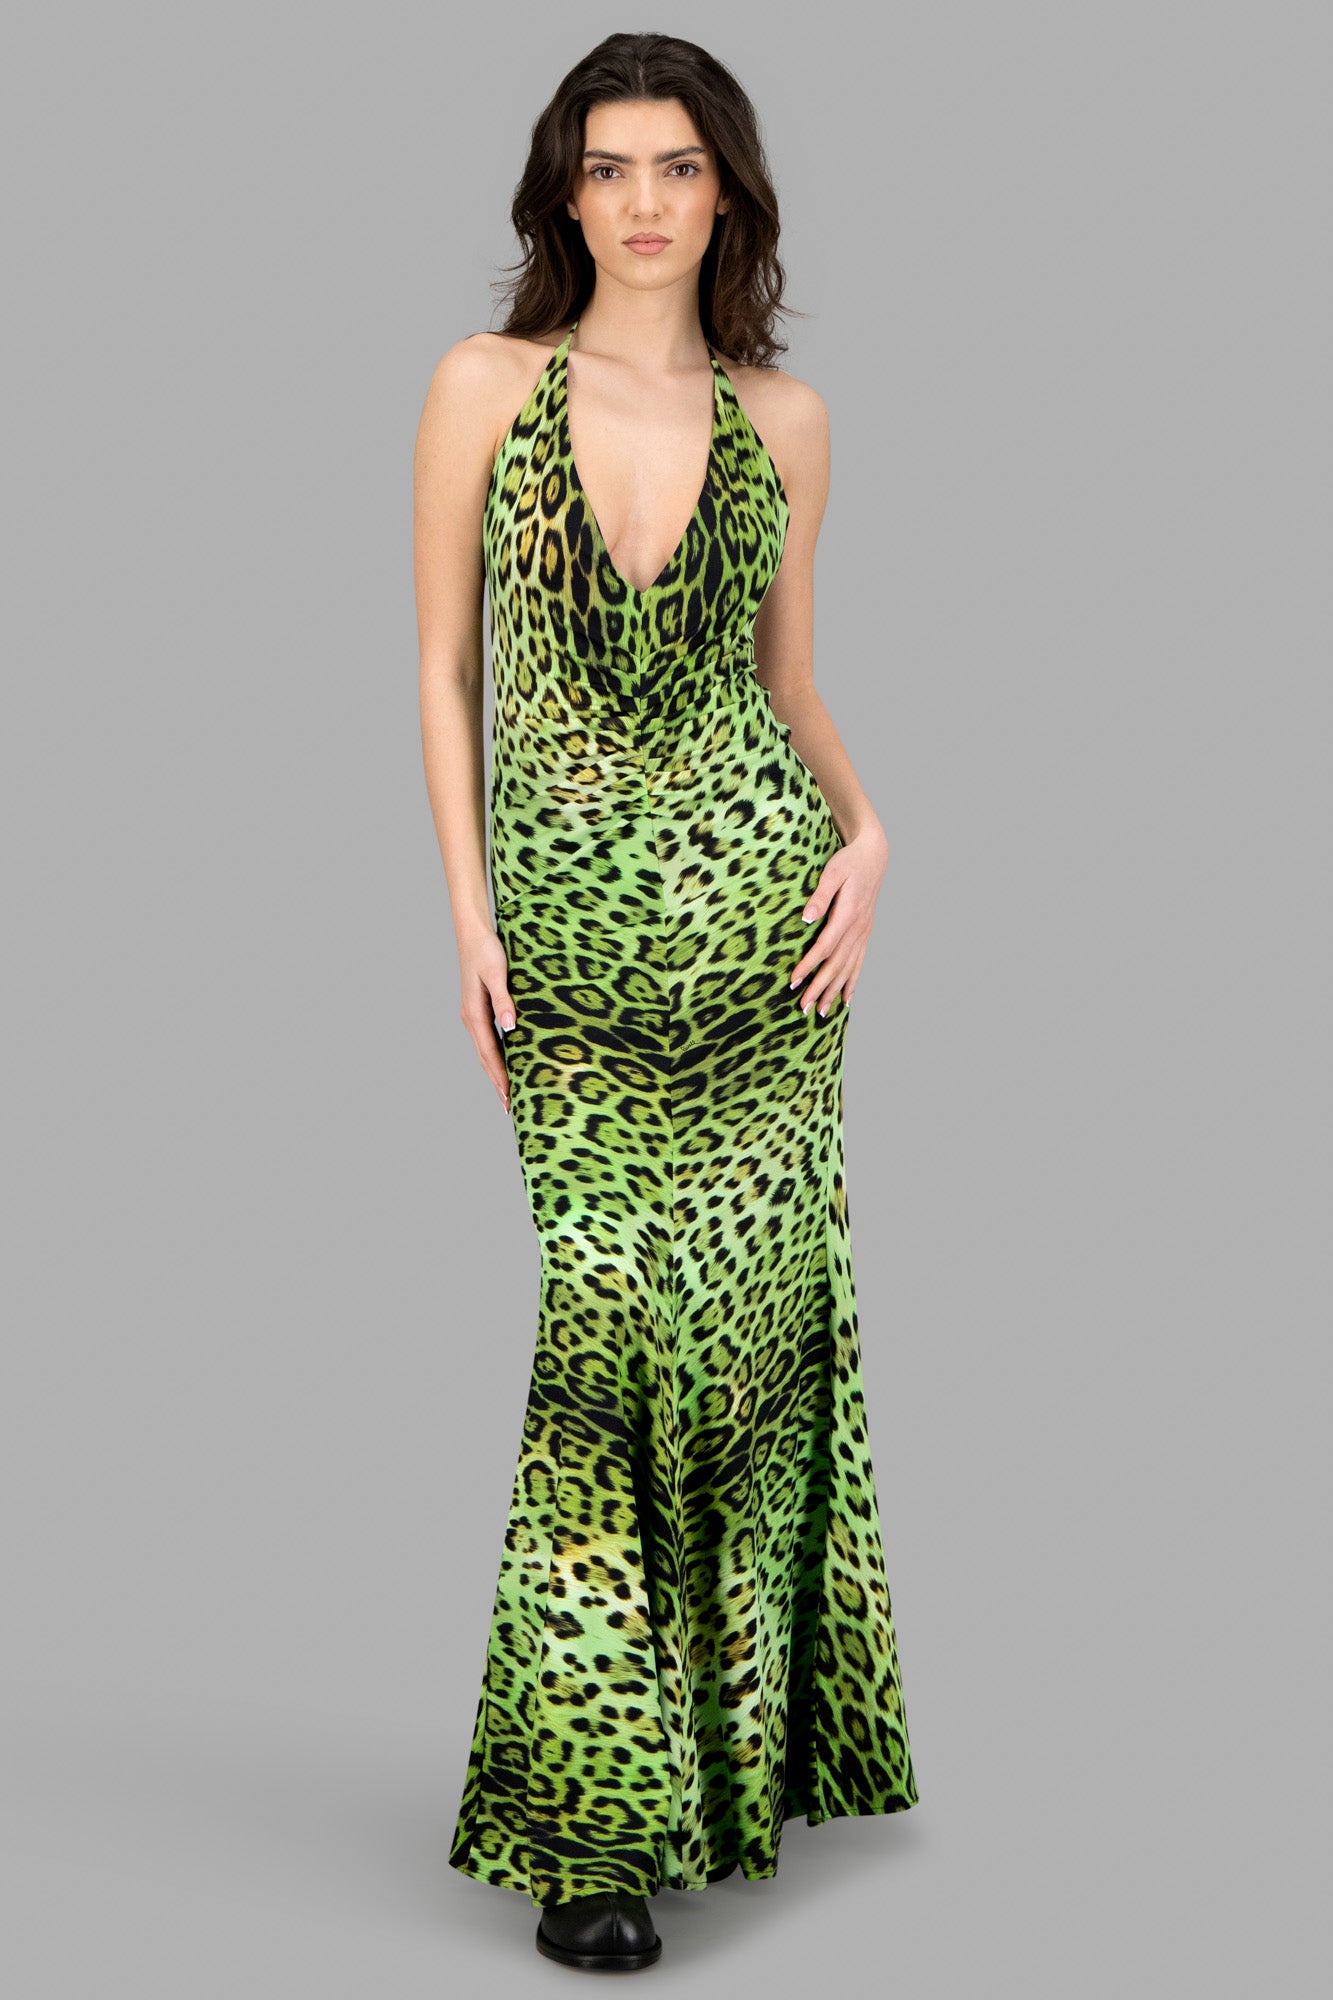 Leopard-Print Halterneck Dress